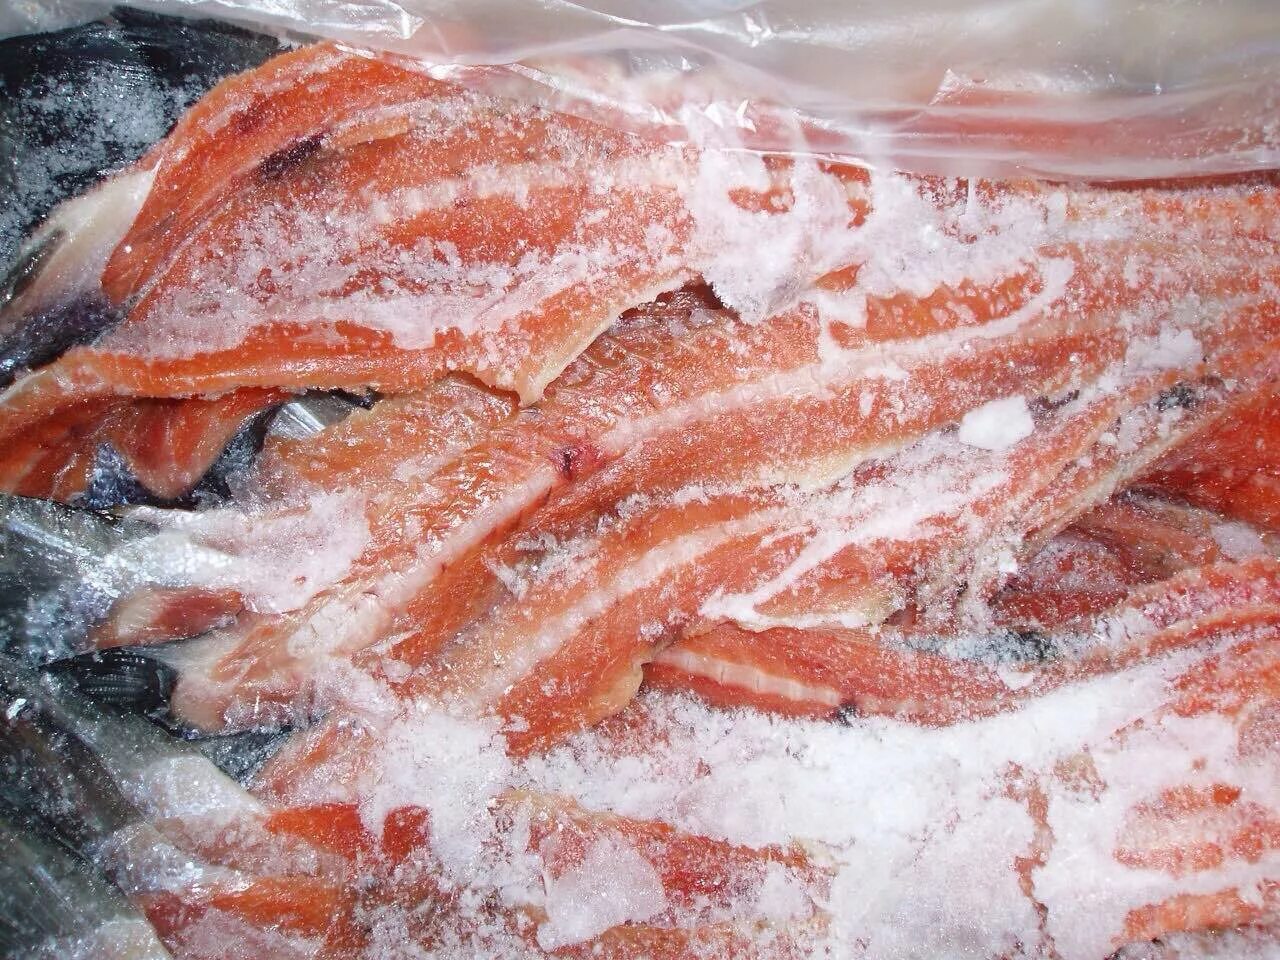 Перемороженная красная рыба. Лосось заморозка. Сёмга свежемороженая. Замороженная красная рыба. Морожено соленая рыба